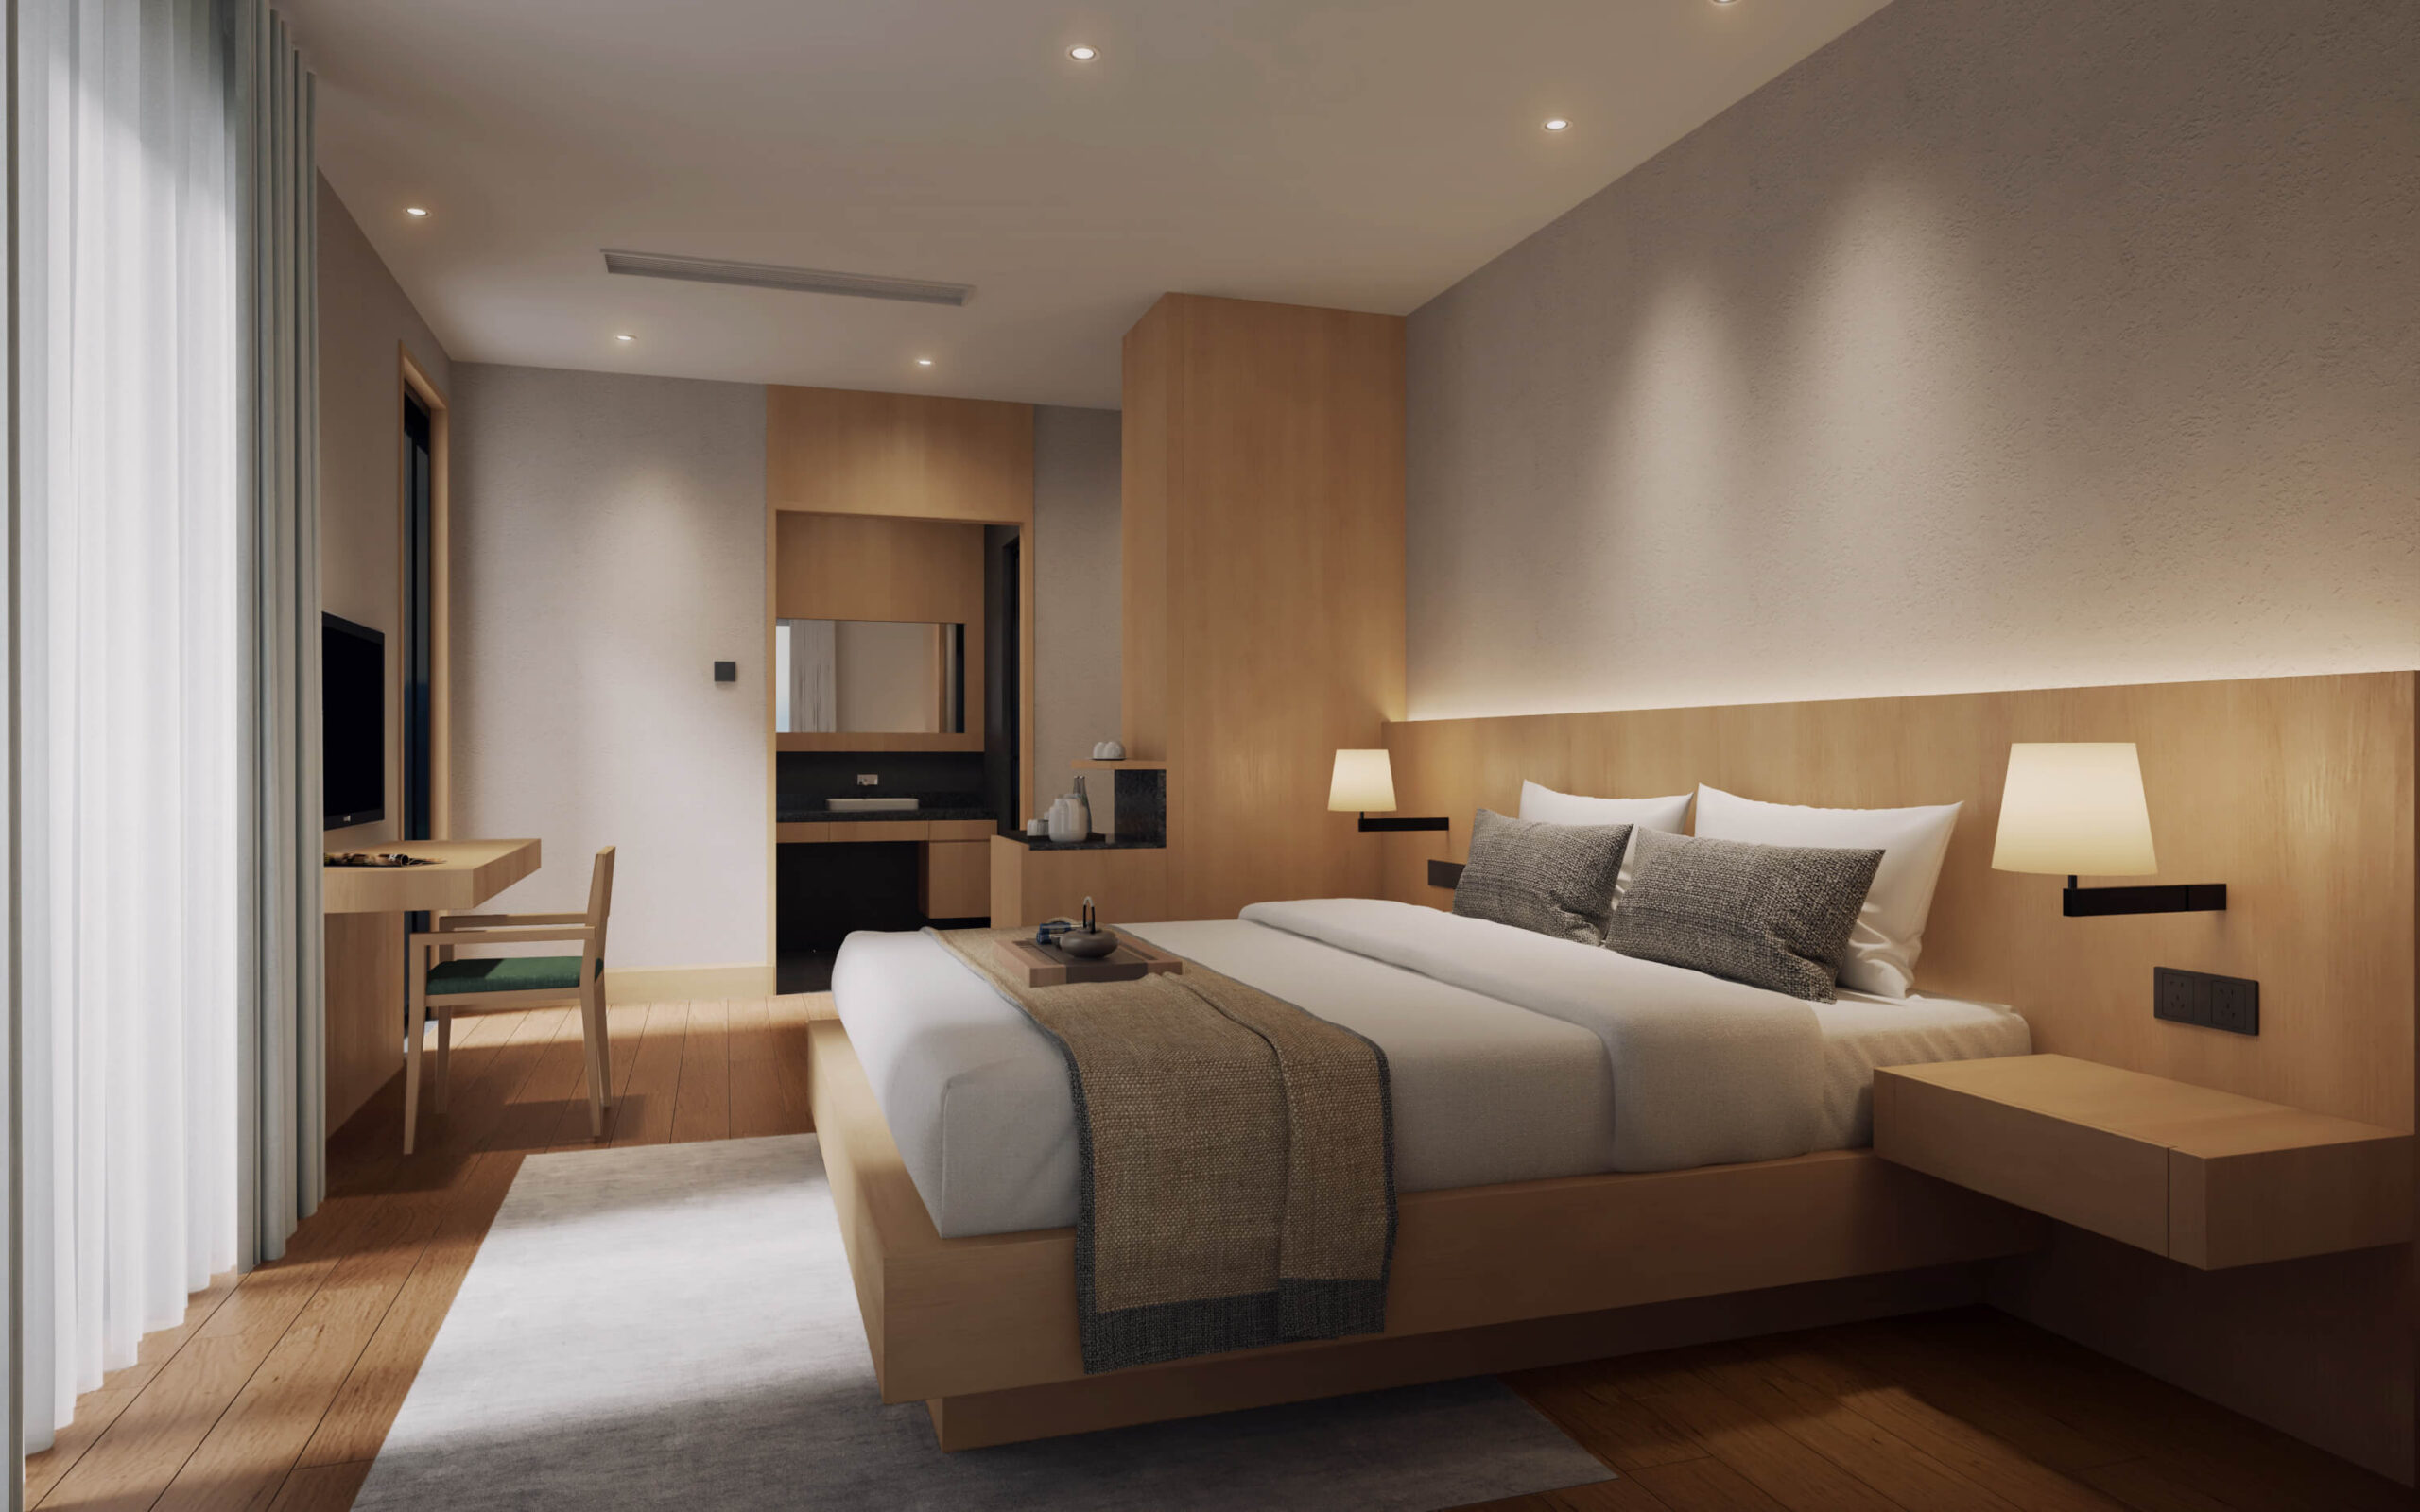 32——CRESCENT HILLS · Apartment-半月山温泉小镇二期公寓 空间 室内设计 AkayJane (10)